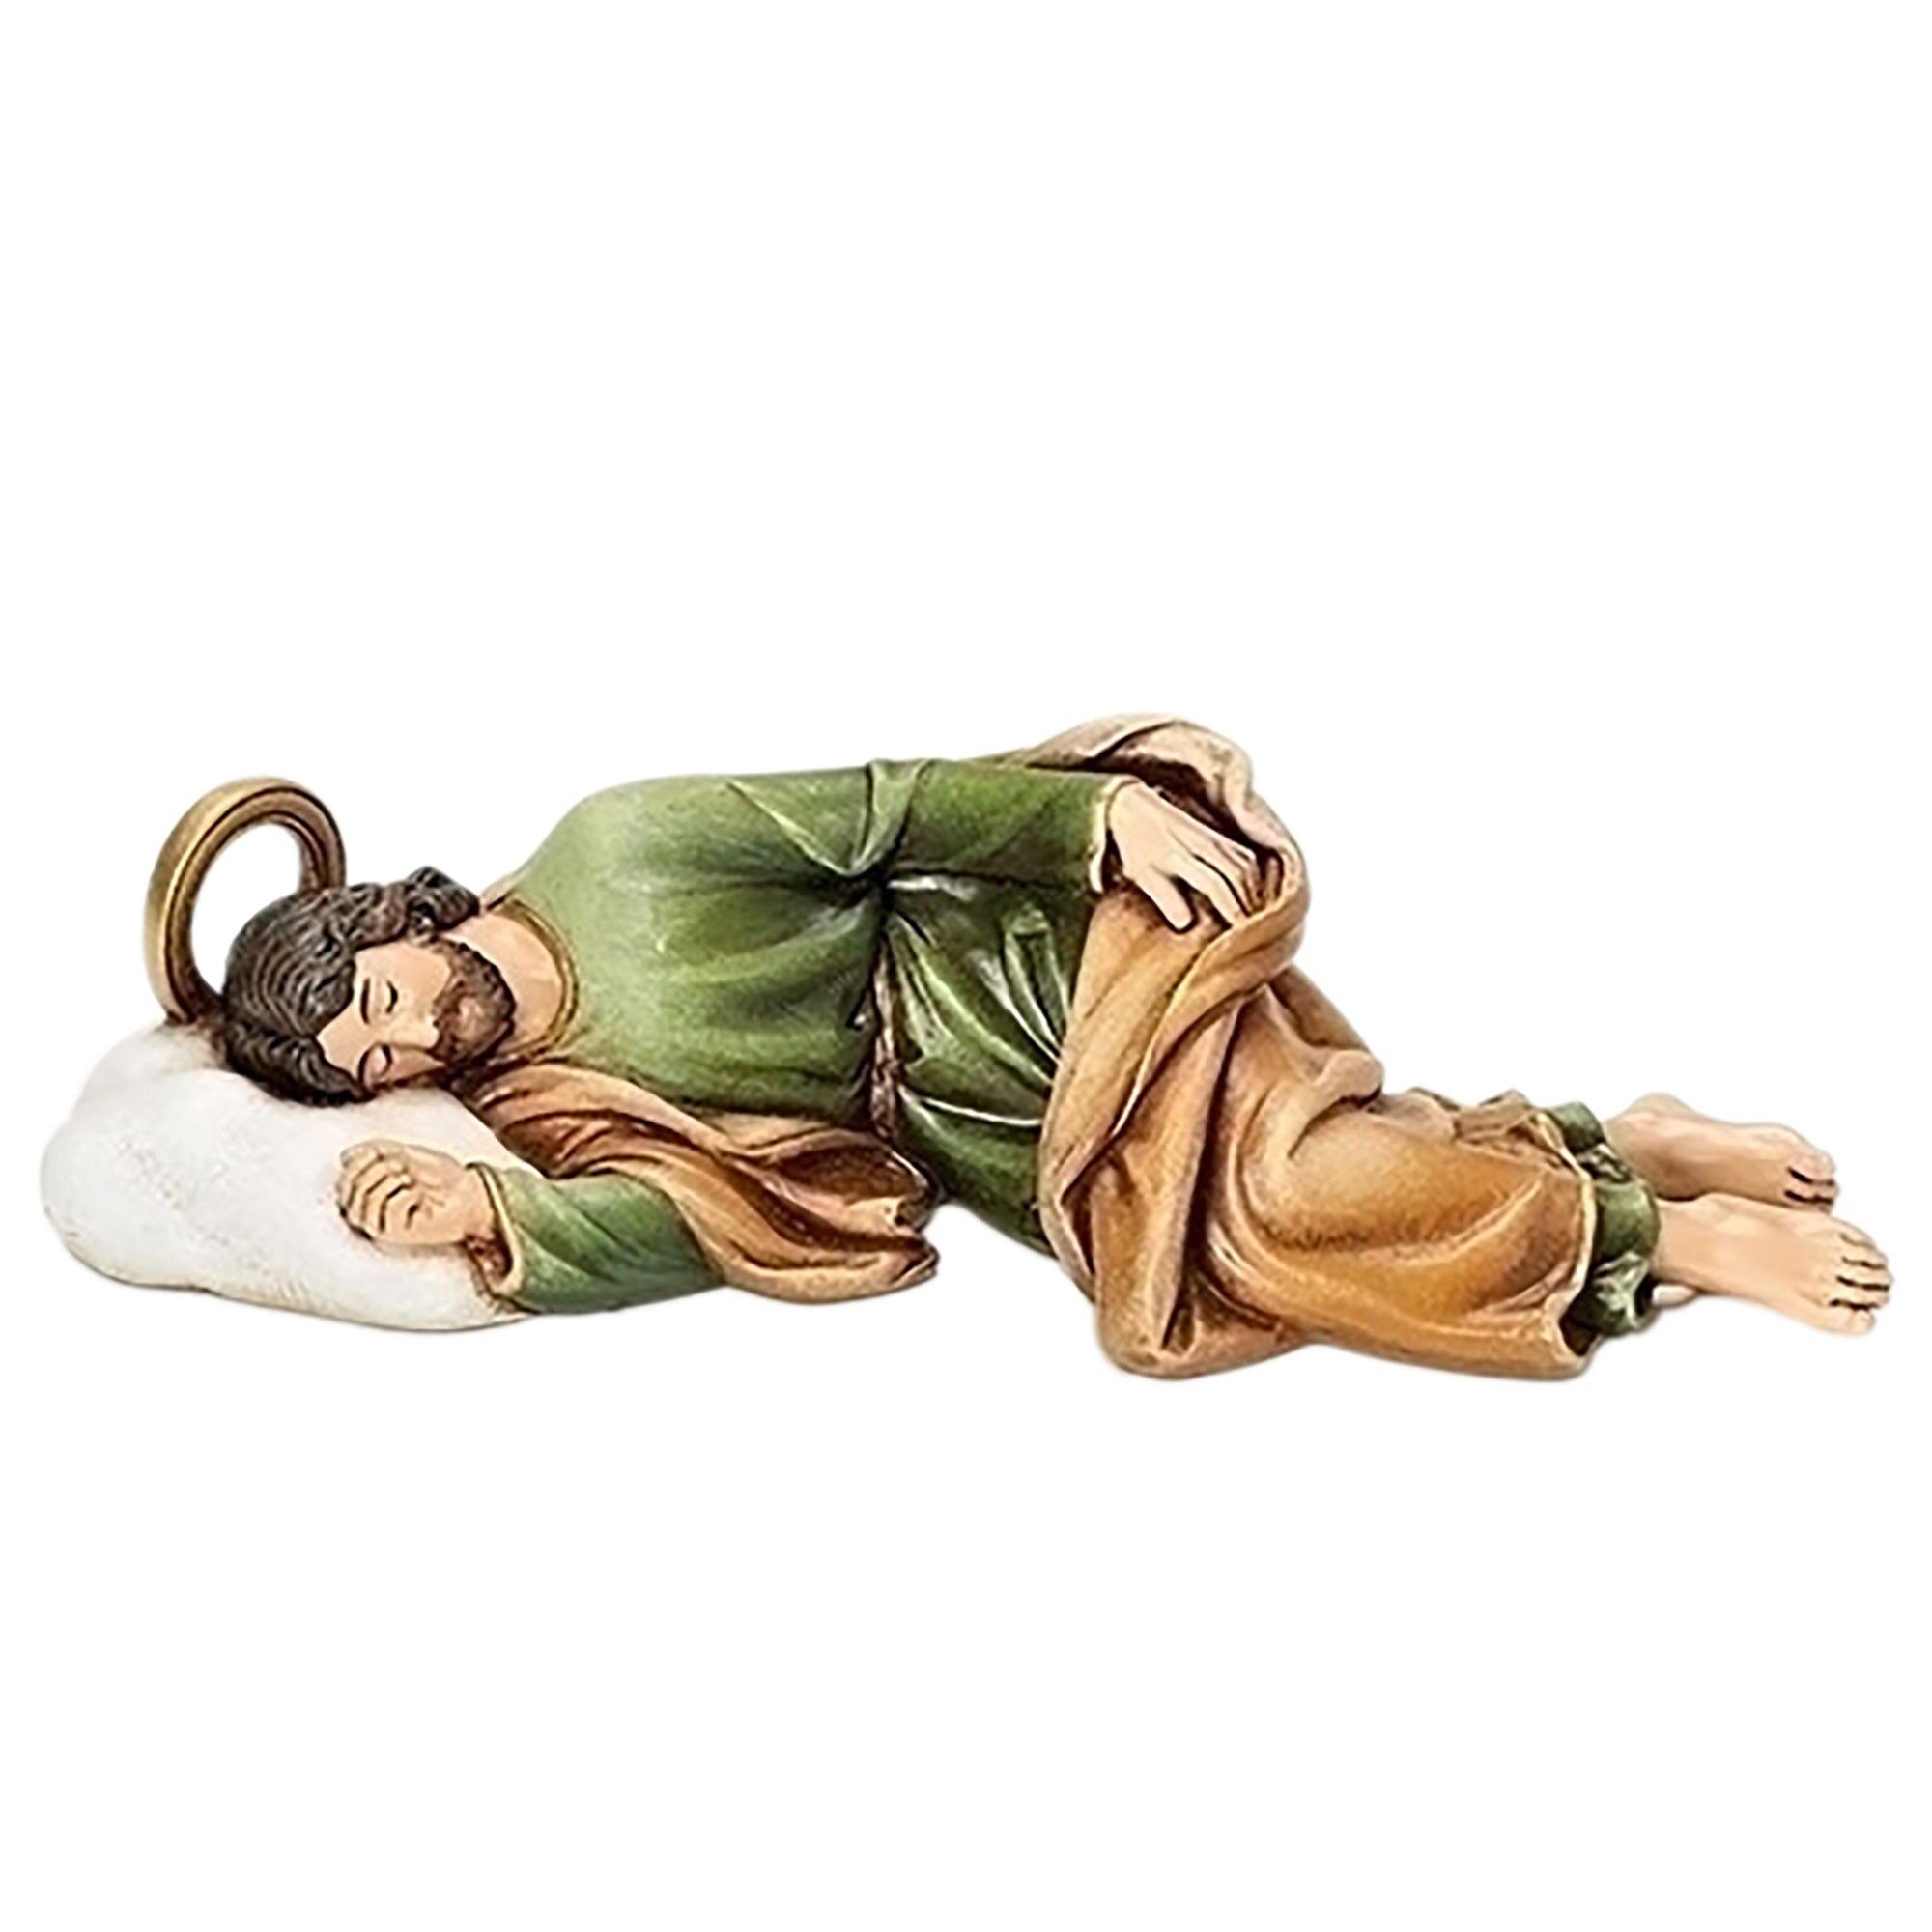 Roman Joseph Studio Renaissance Sleeping Saint Joseph Religious Figurine 66484 New